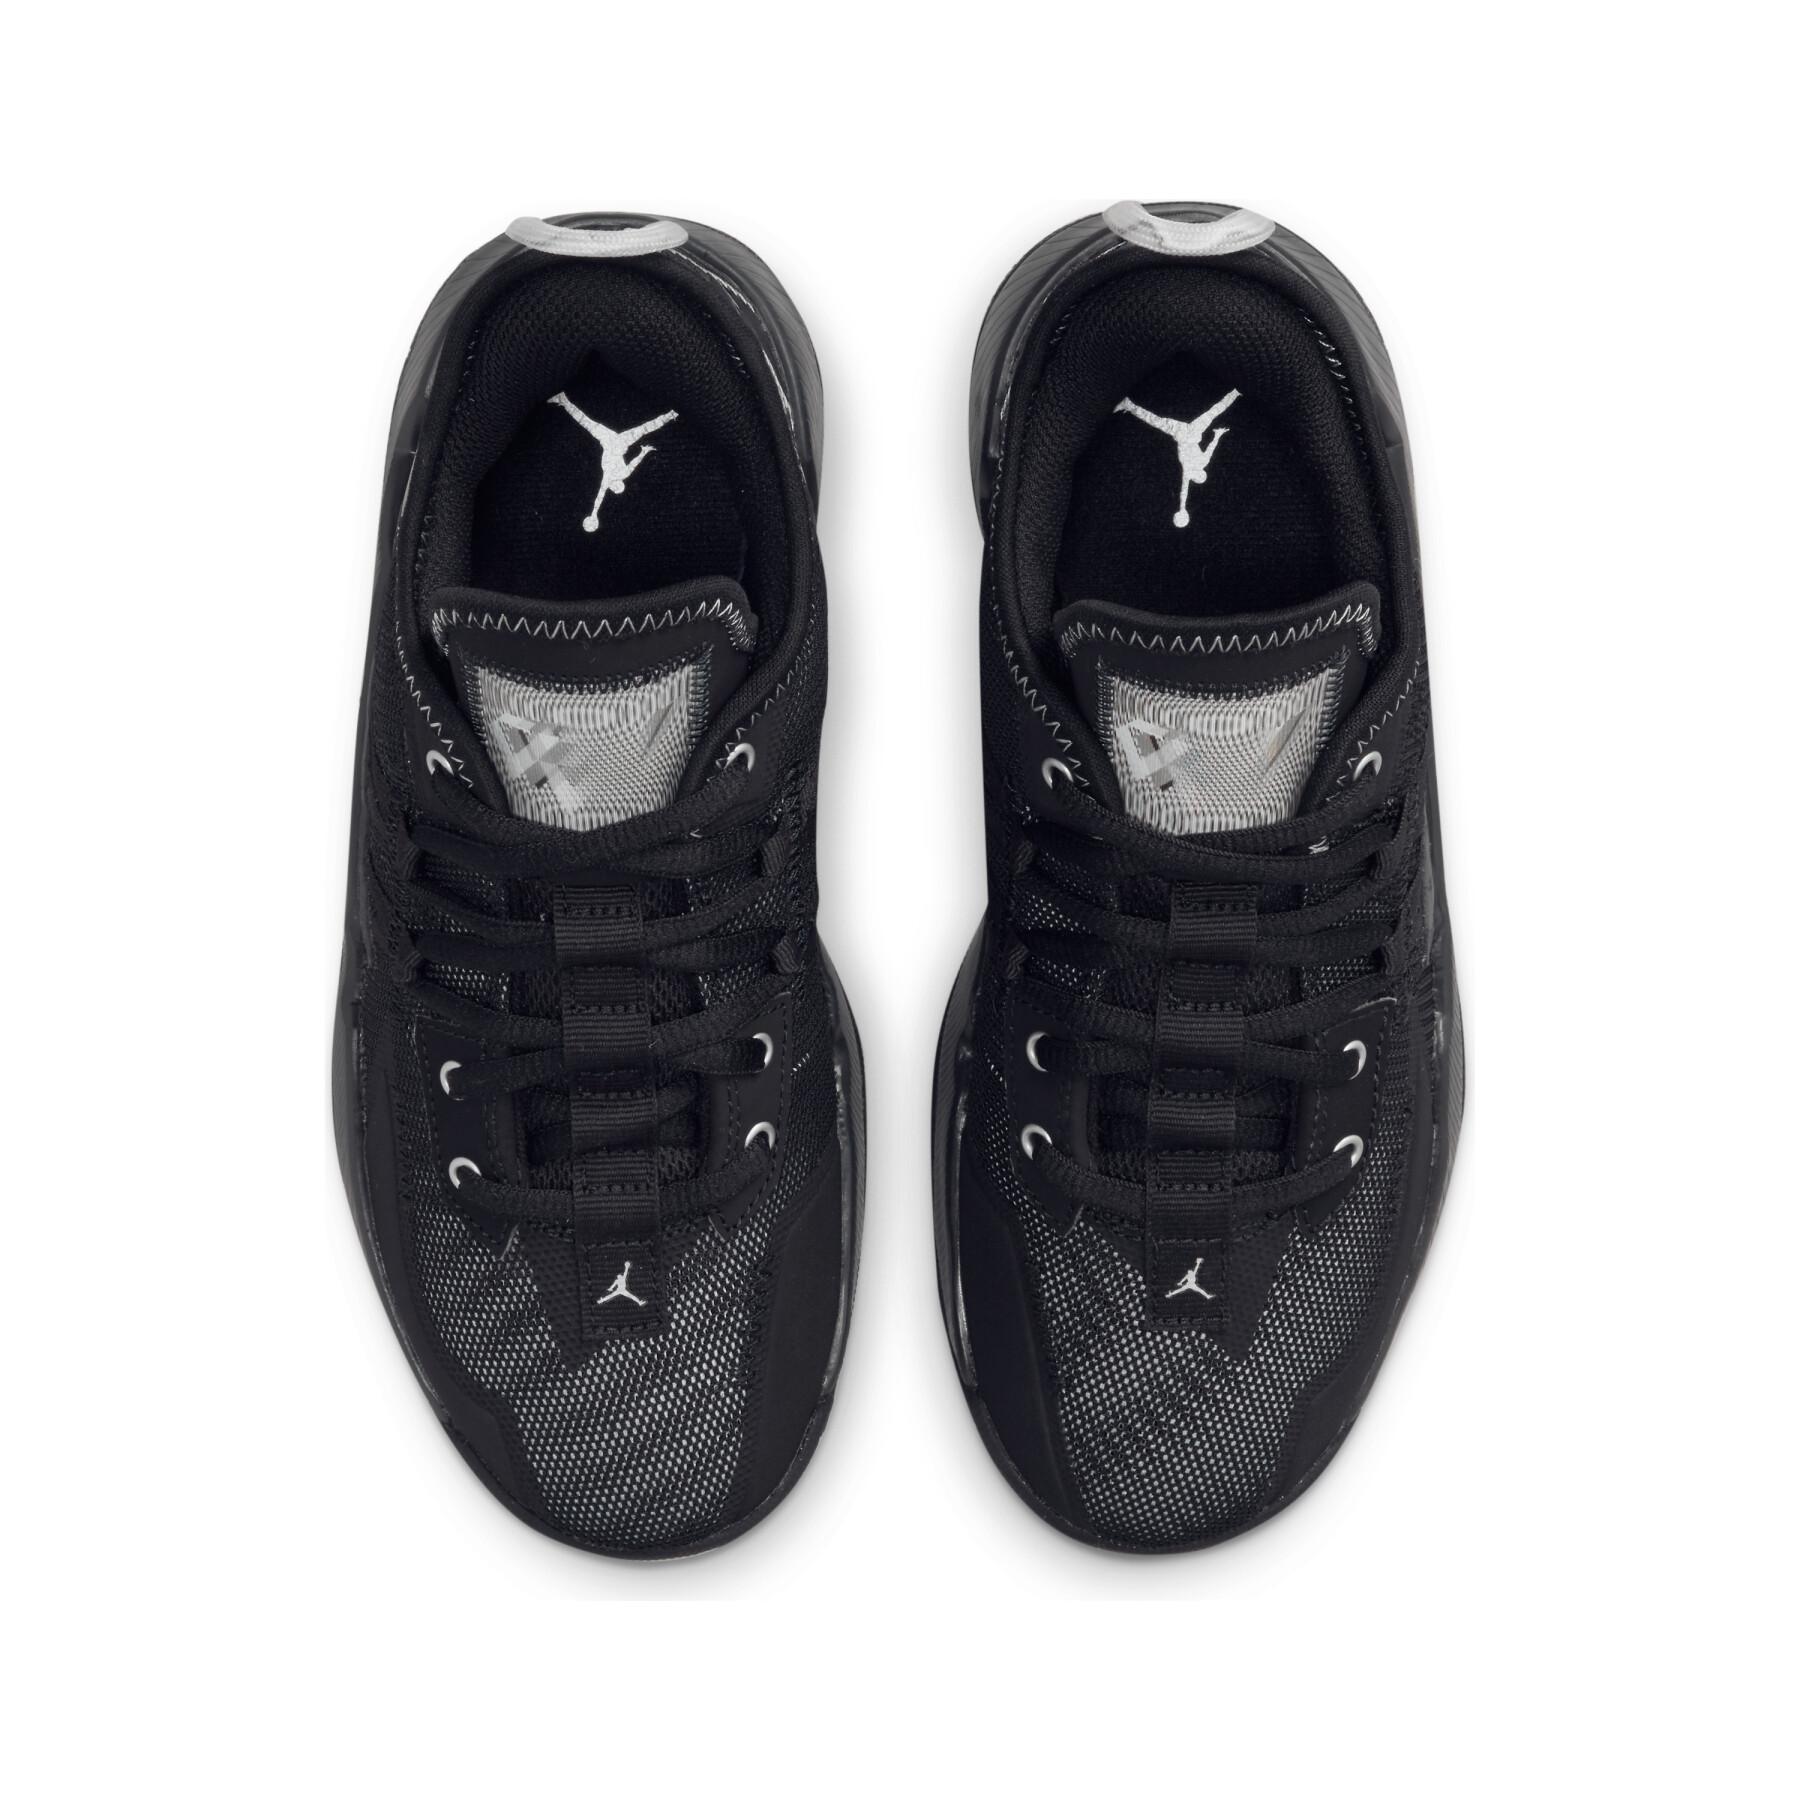 Women's basketball shoes Nike Jordan One Take Ii